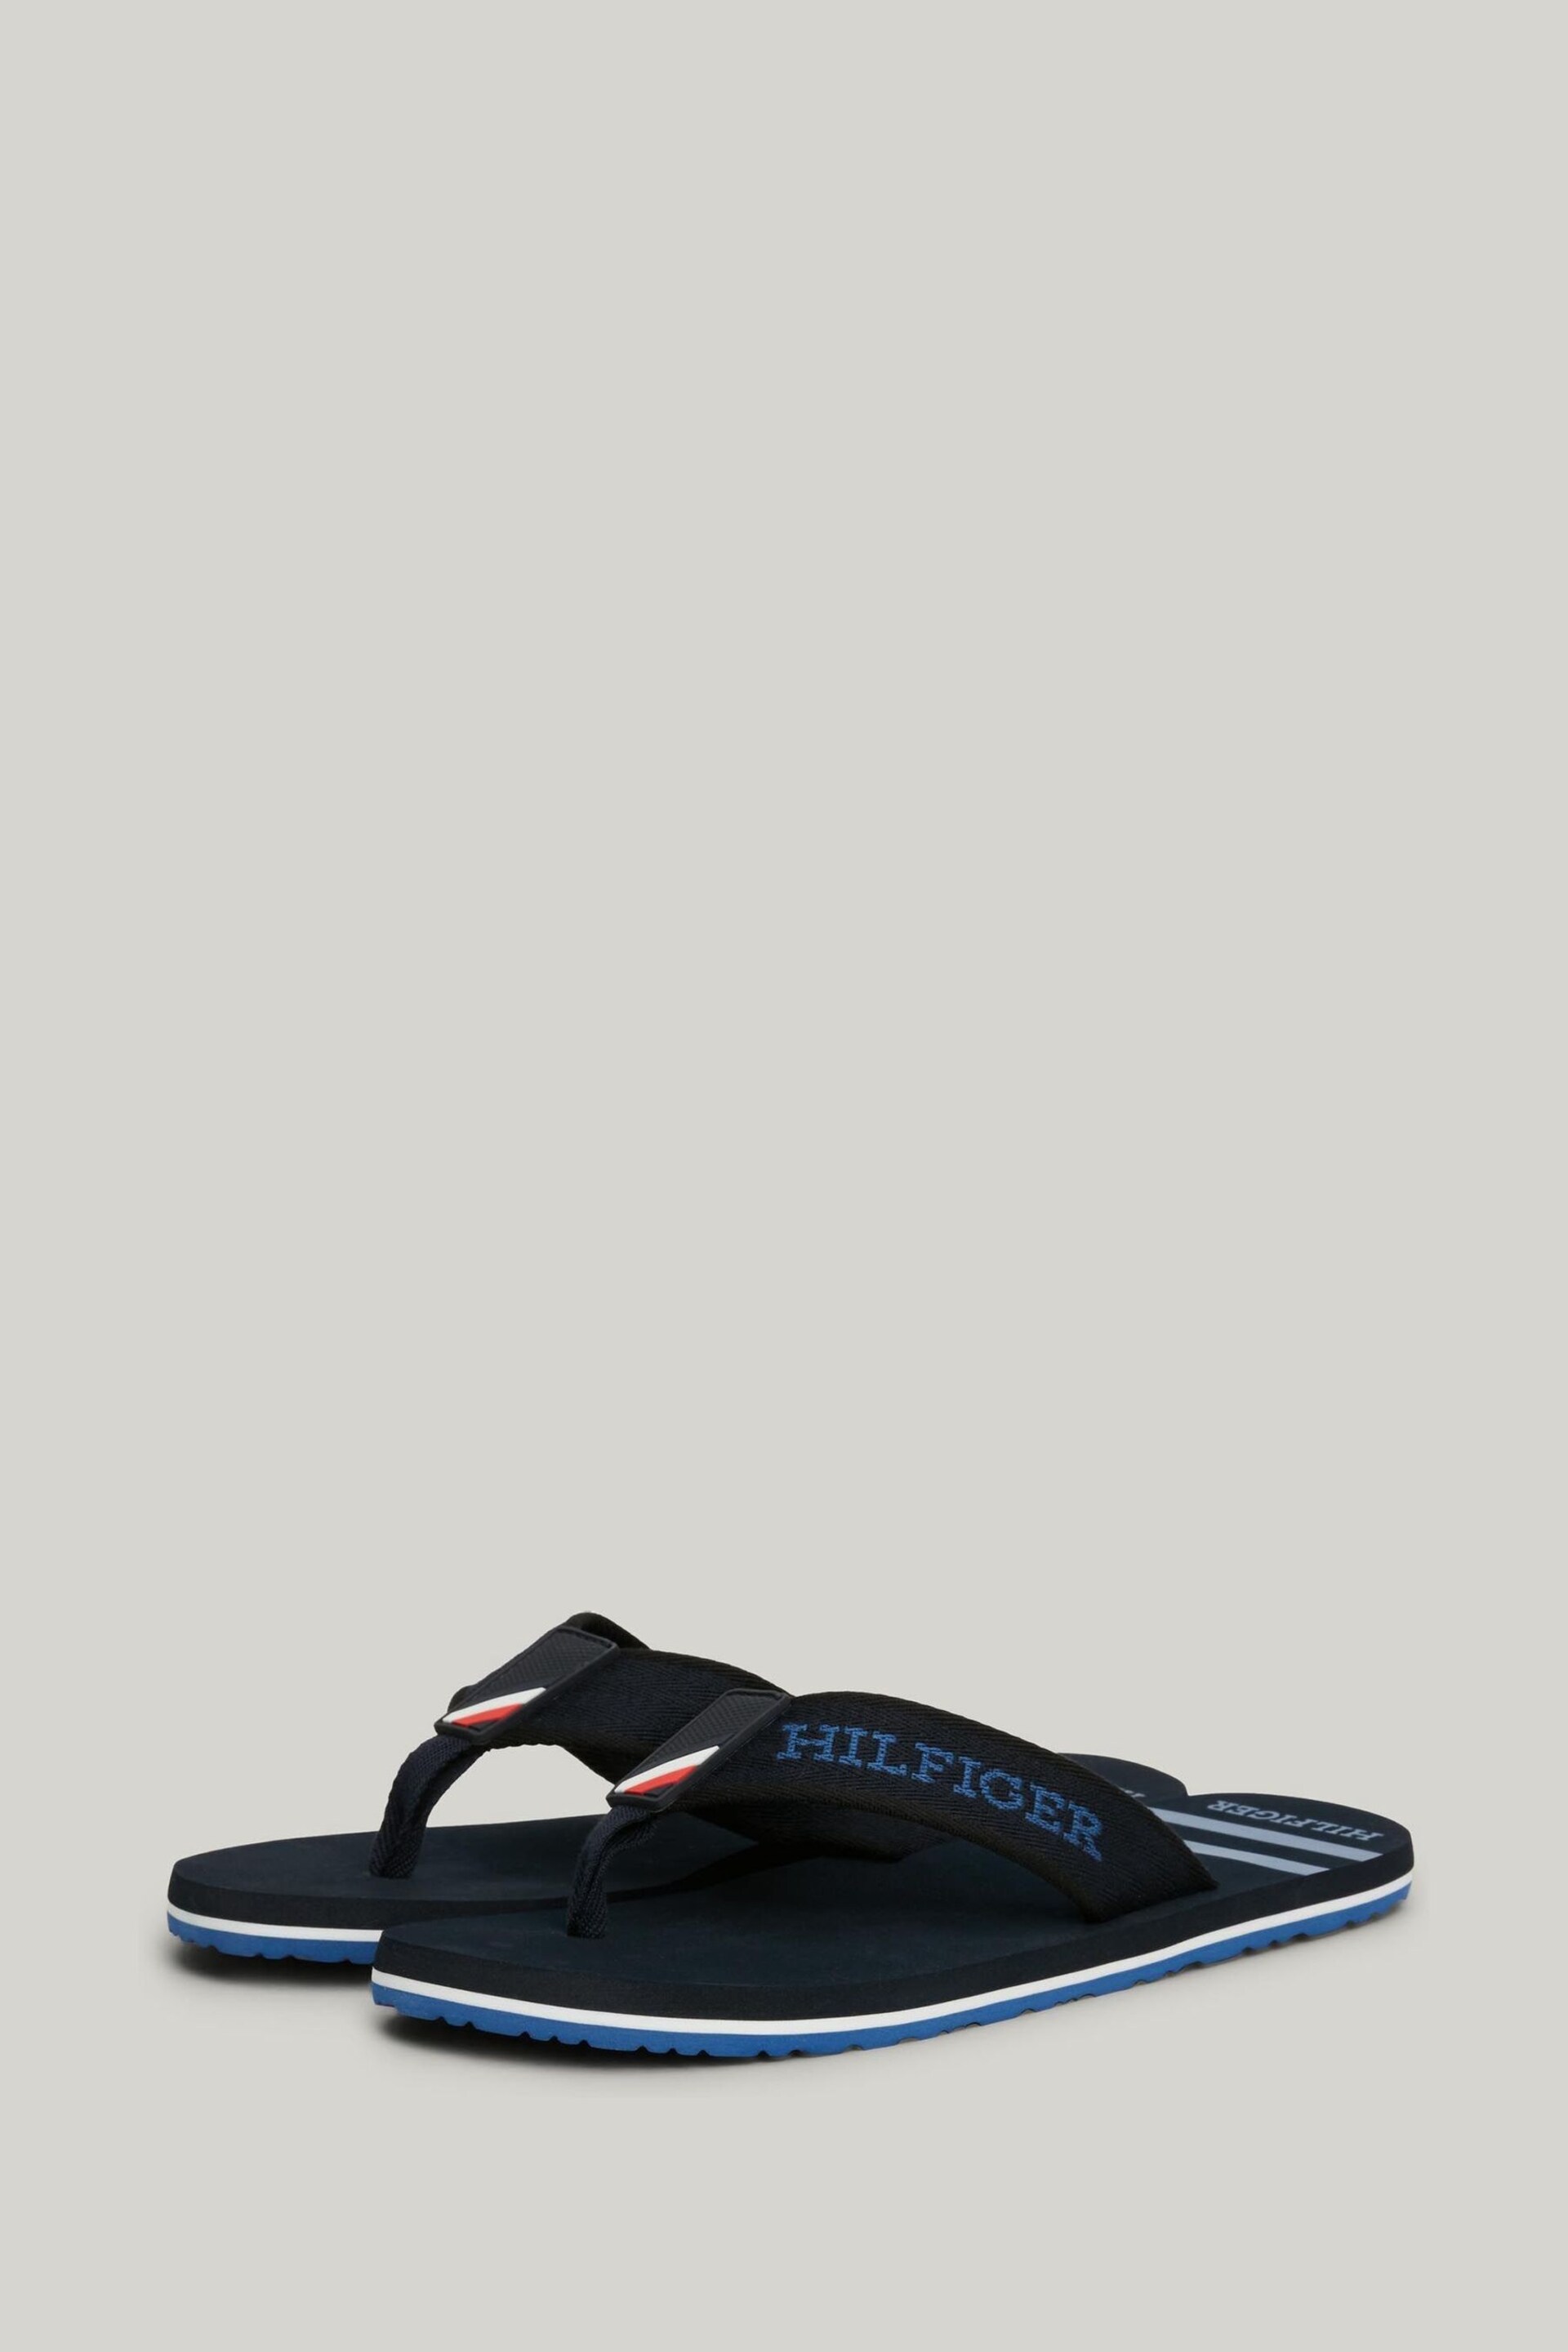 Tommy Hilfiger Blue Sporty Hilfiger Beach Sandals - Image 2 of 6